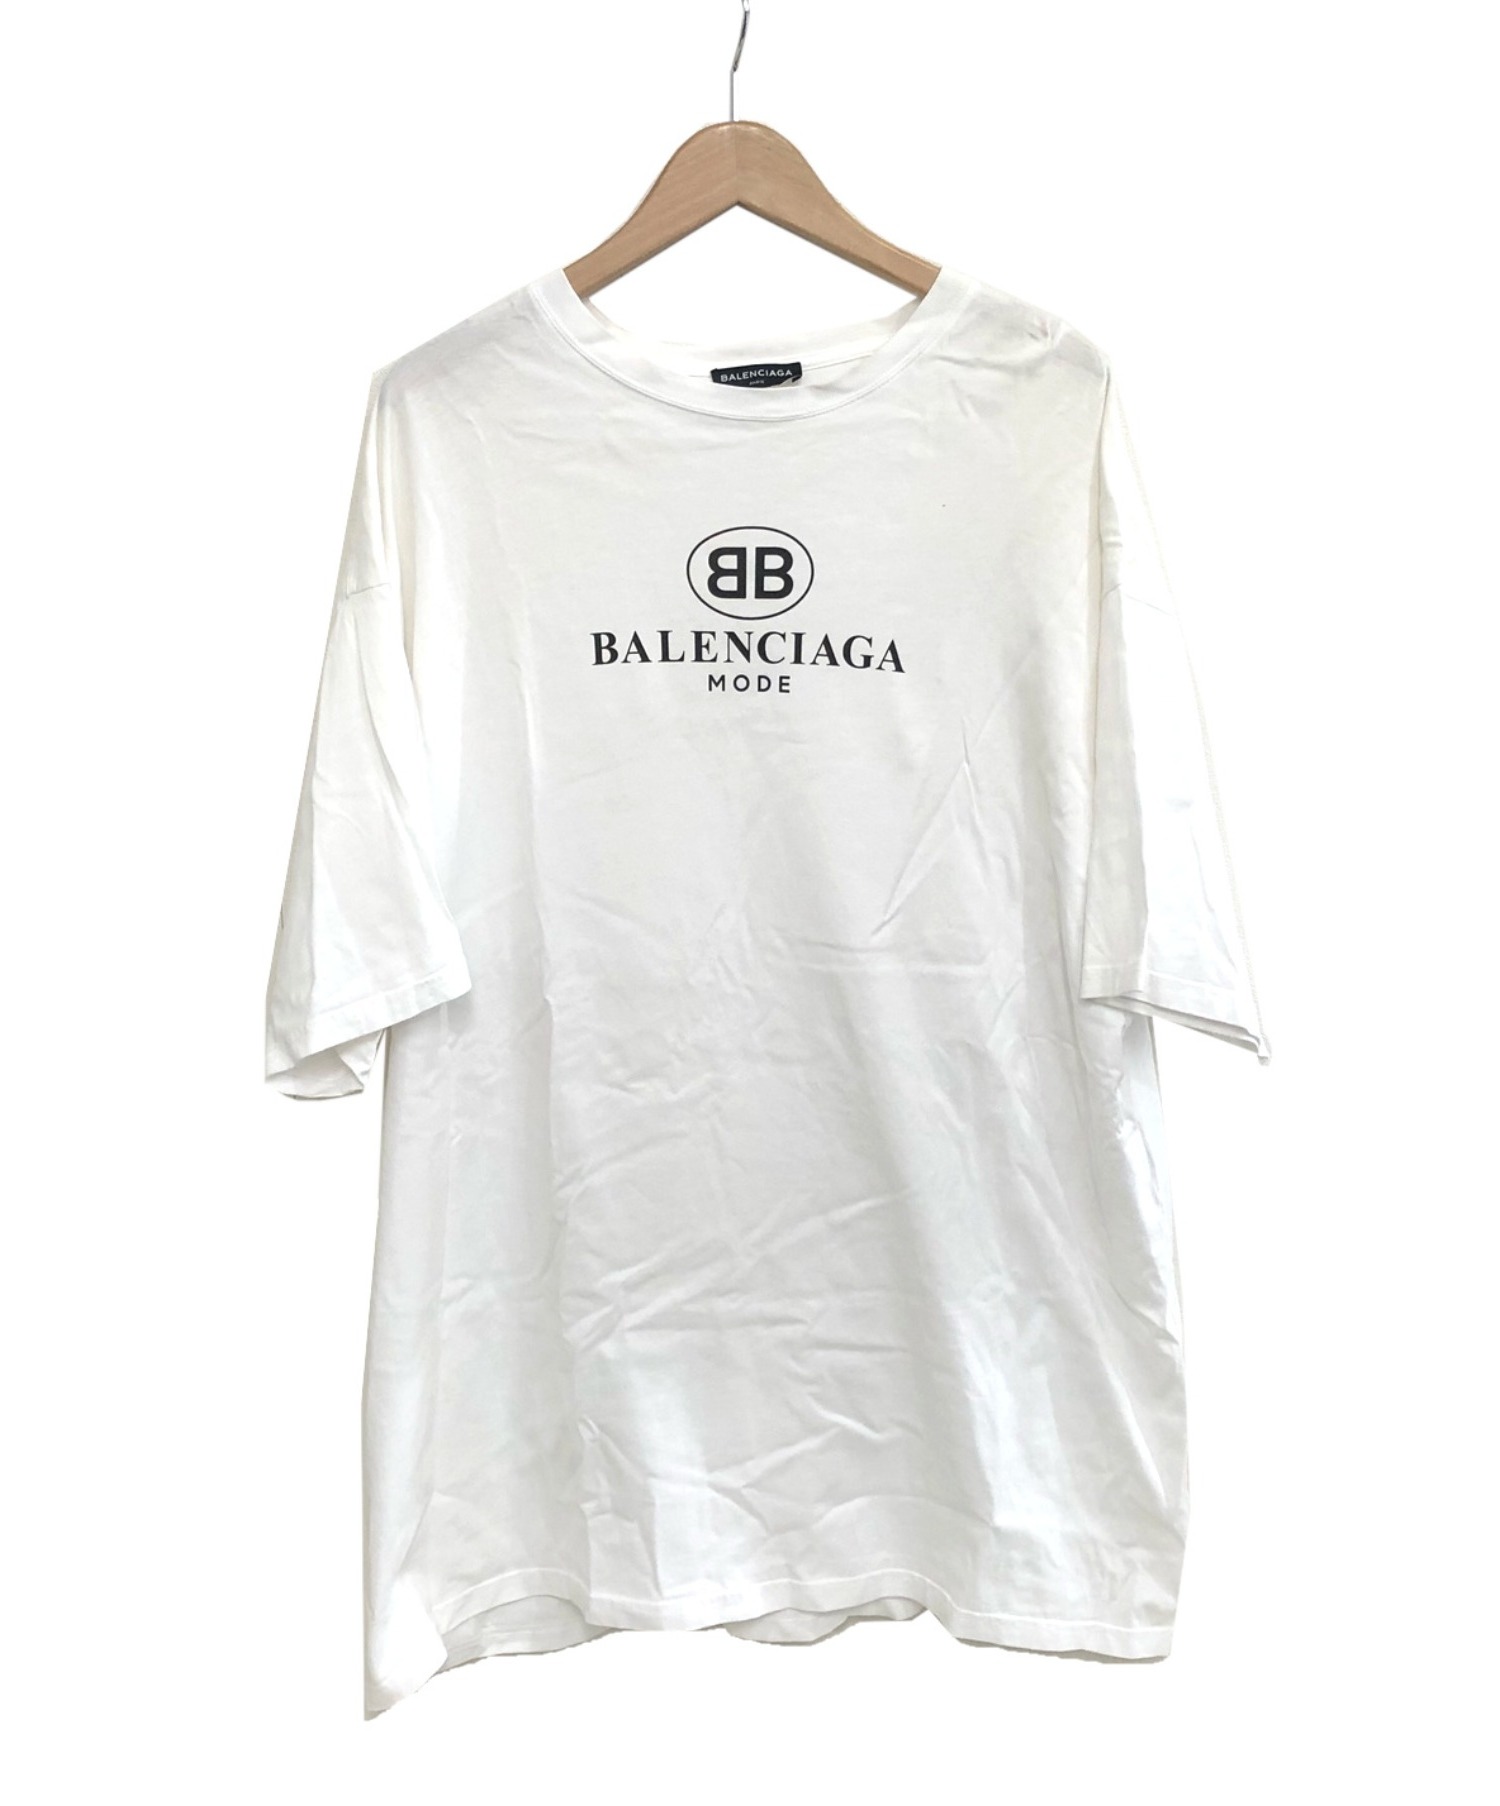 BALENCIAGA バレンシアガ 物物しいサイズ セーター - whirledpies.com